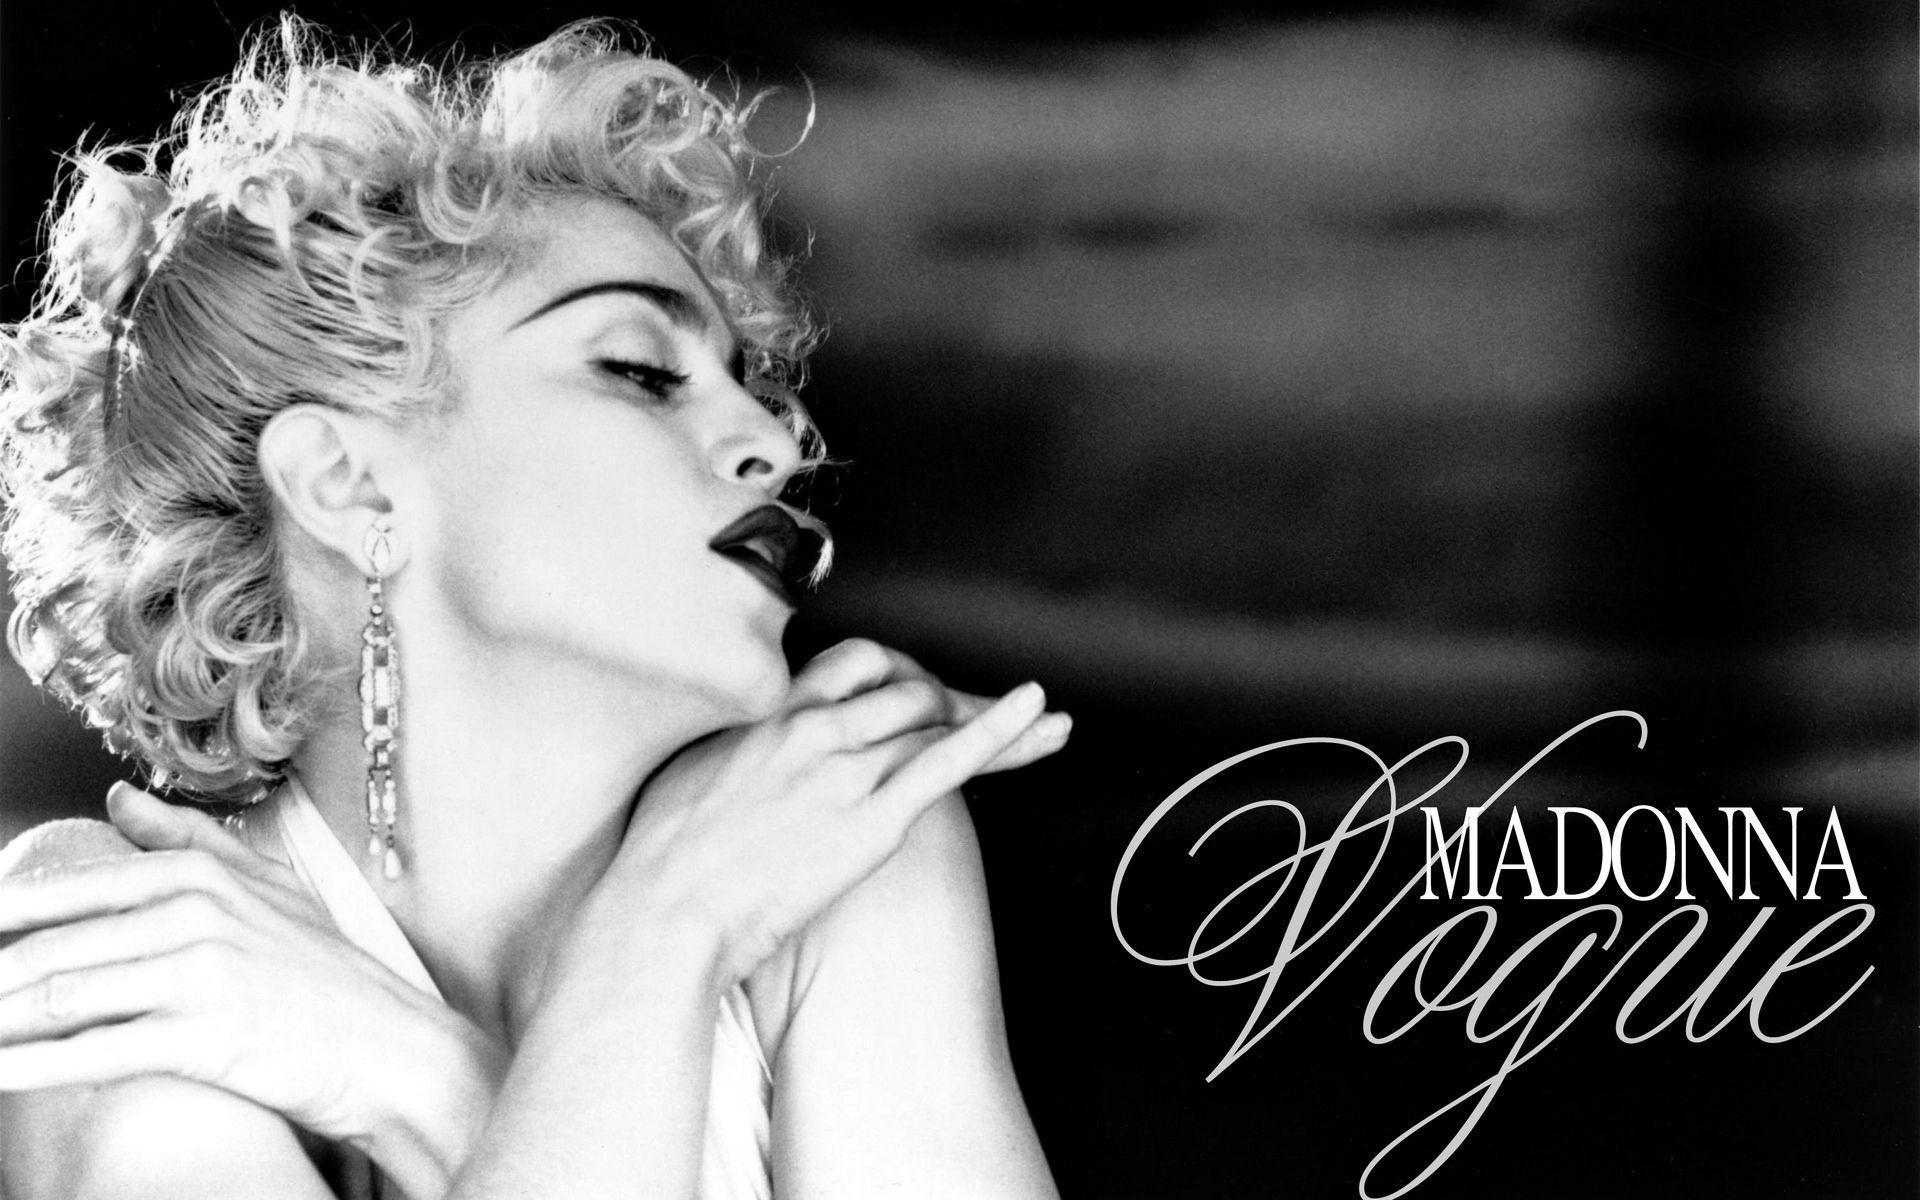 Madonna Wallpaper, Live Madonna Wallpaper, QON97 Madonna Background